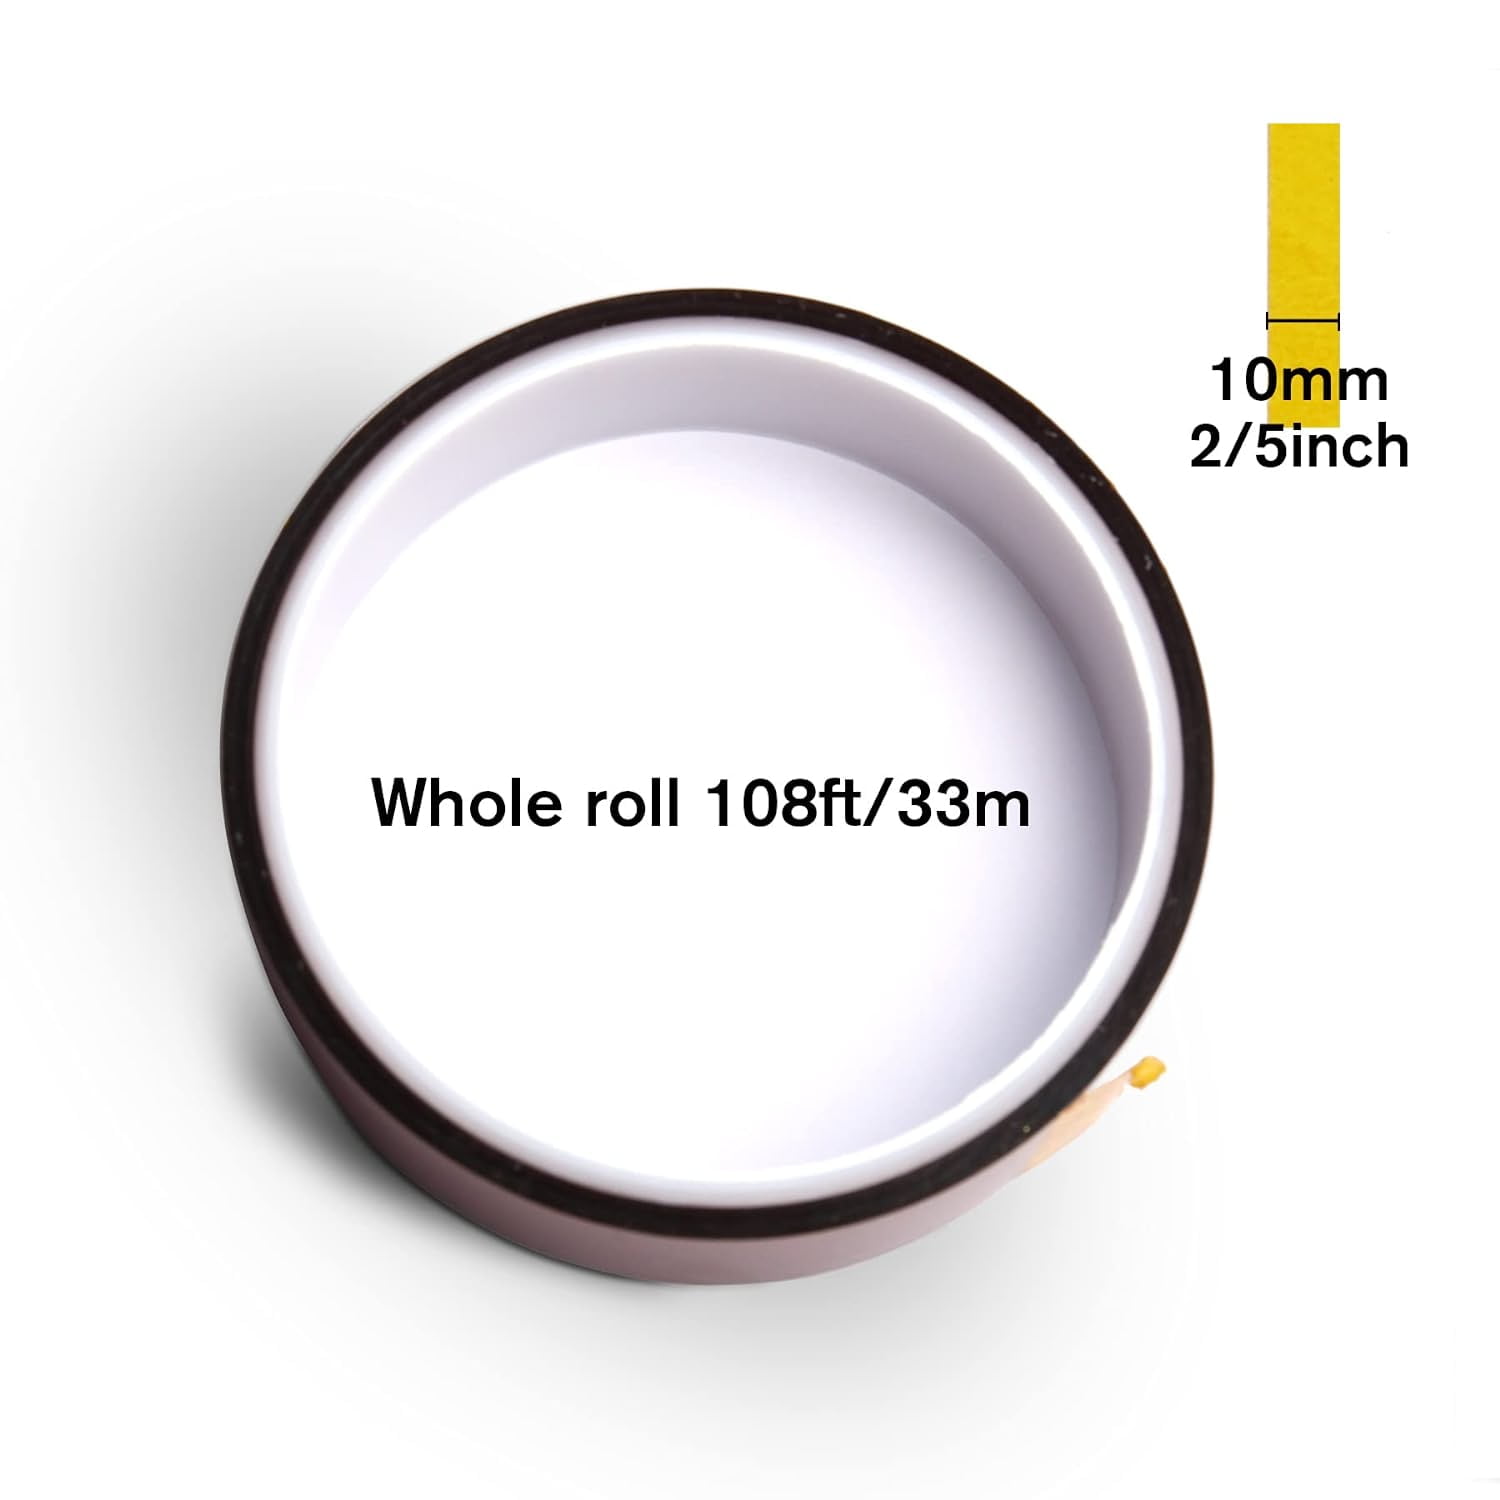 ProSub High Temperature Heat Resistant Tape - 1/8in x 108ft